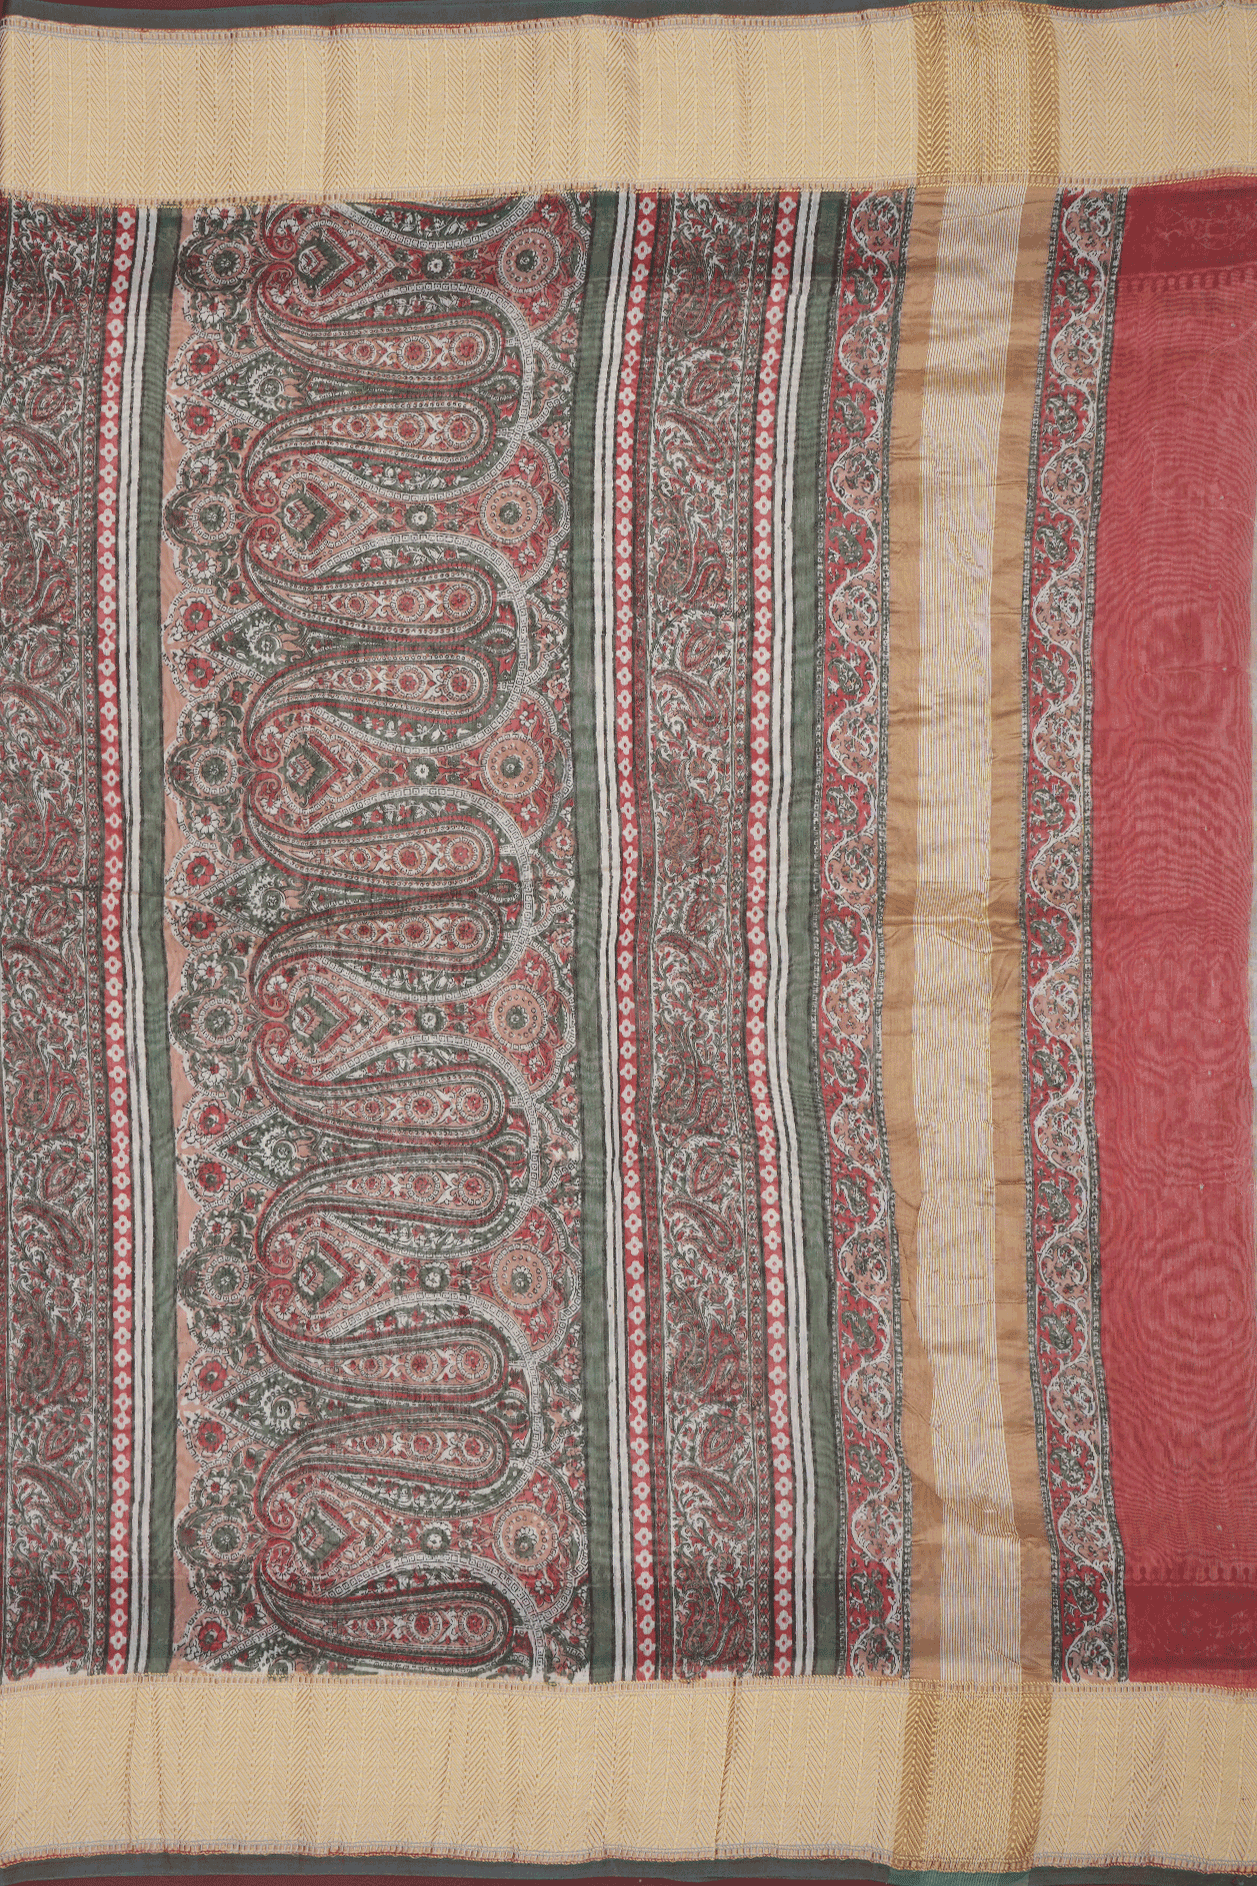 Paisley And Floral Printed Multicolor Chanderi Cotton Saree